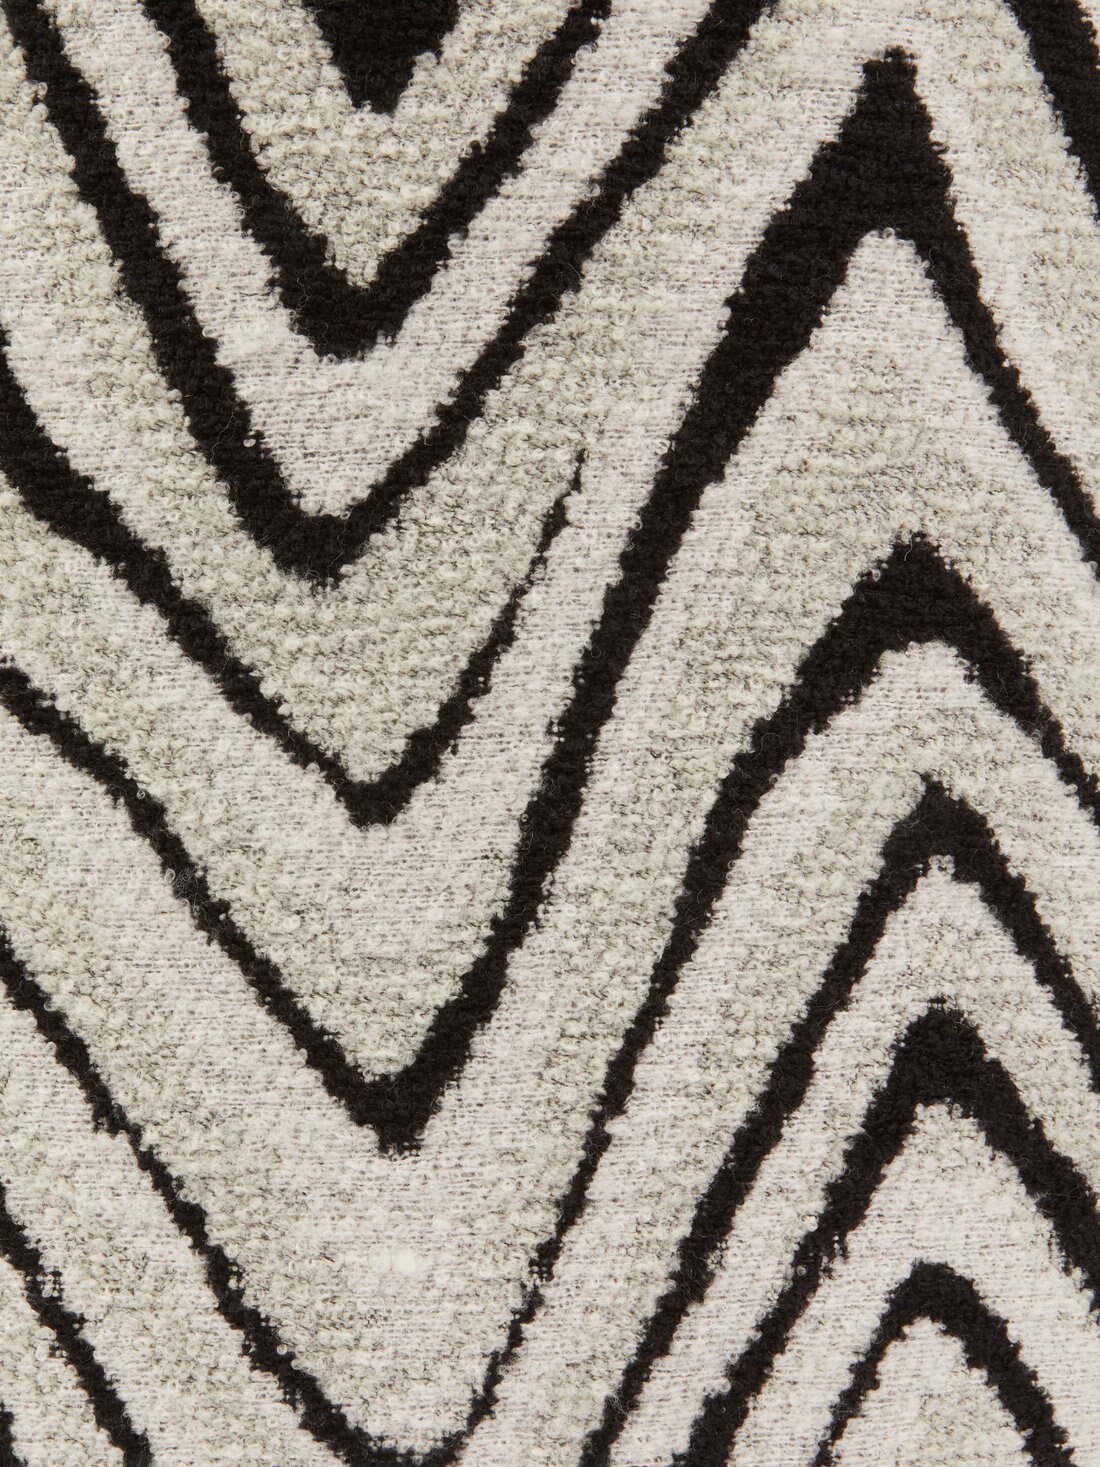 Savana 40x30 cm wool blend chevron cylindrical pouffe, Black & White - 2